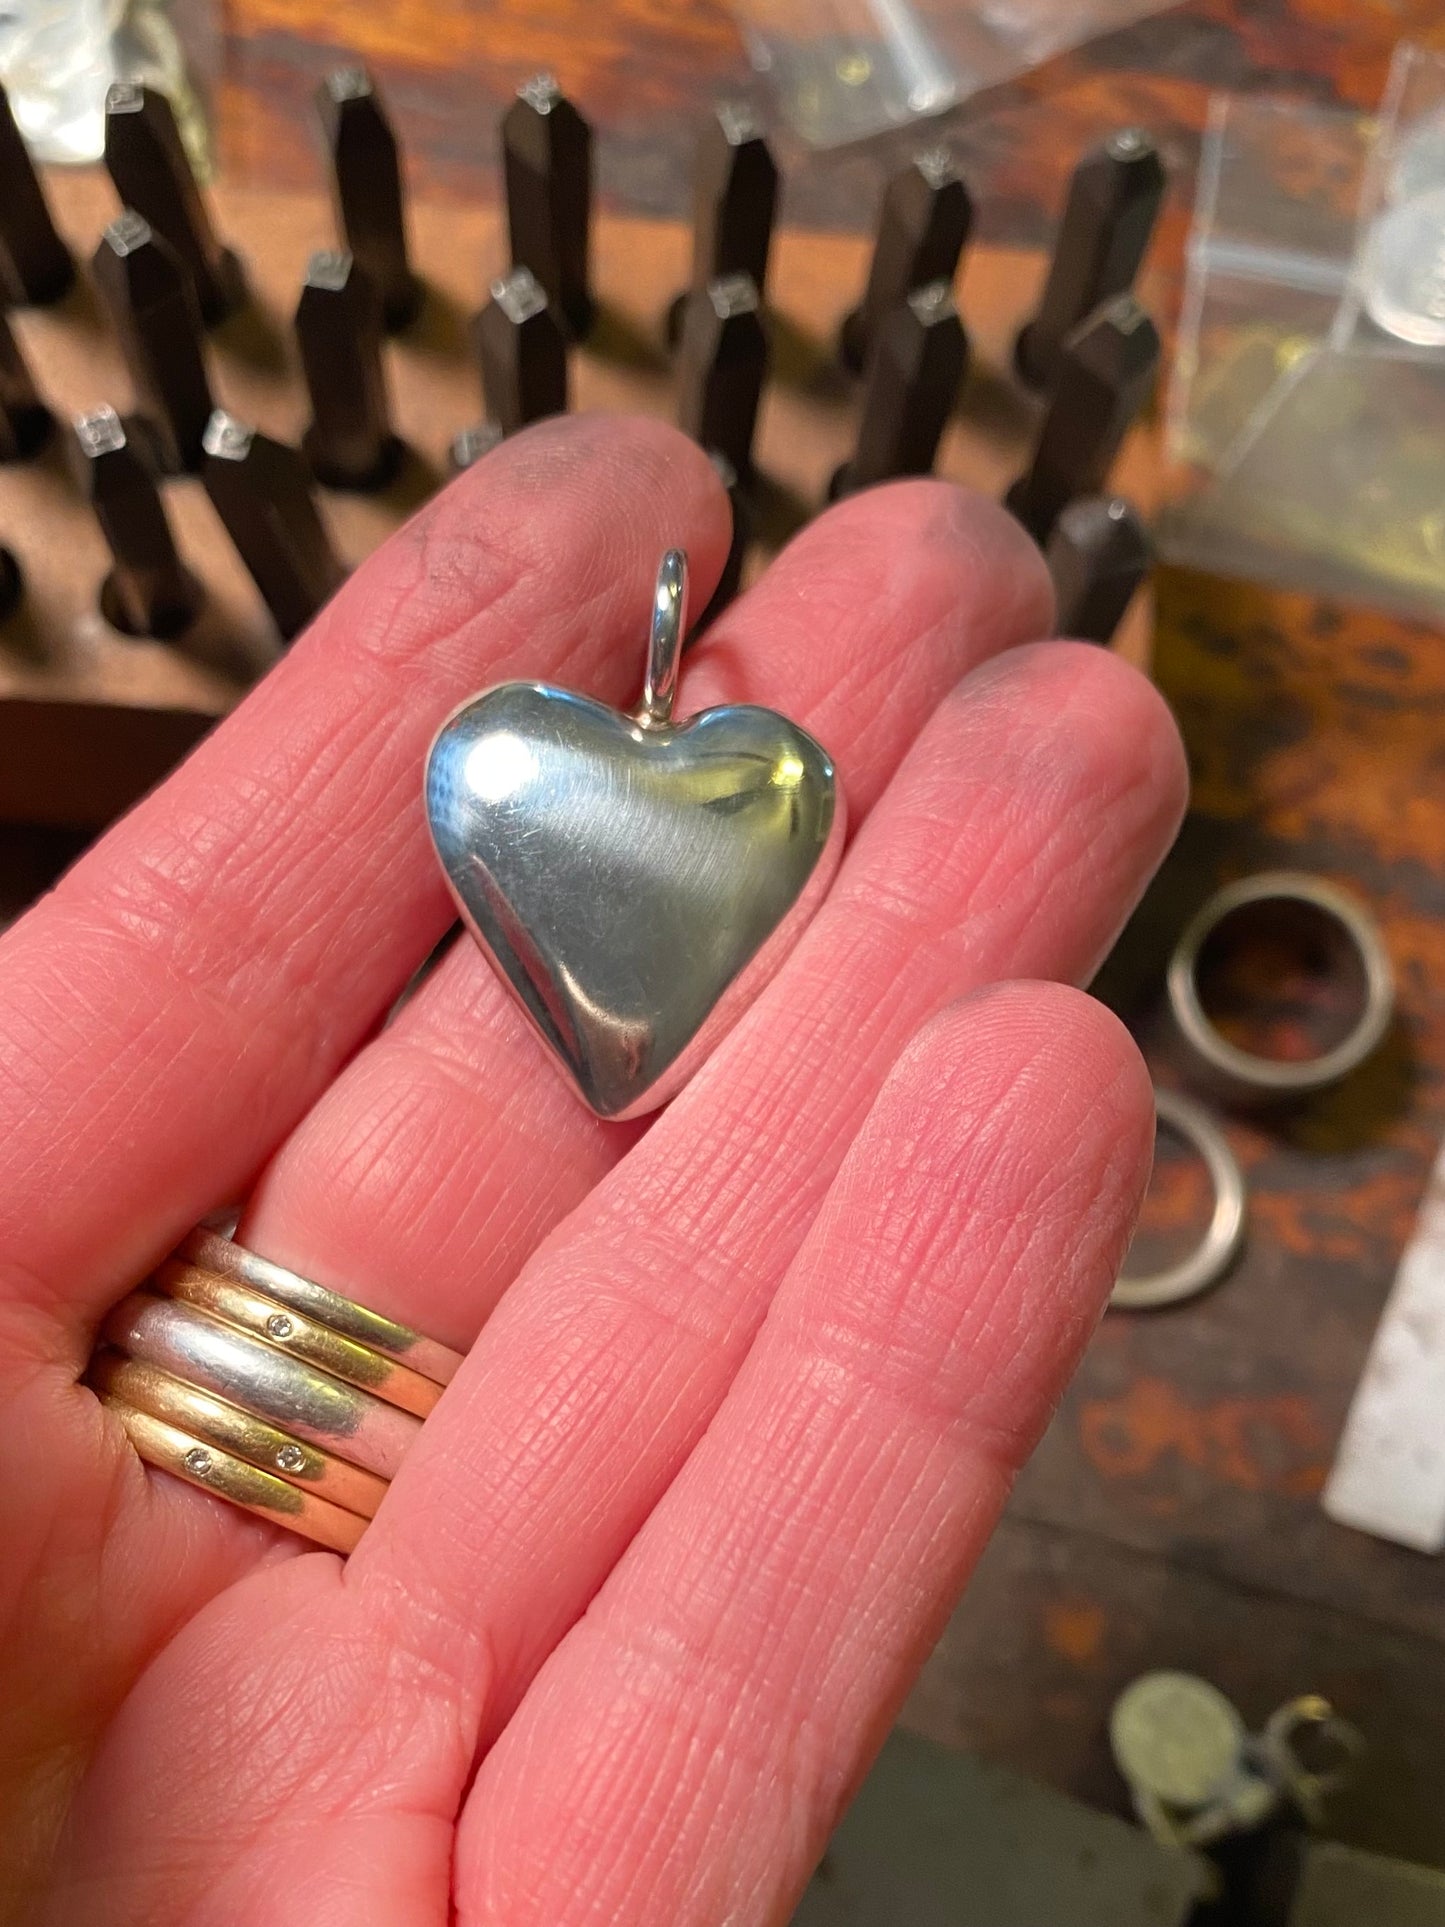 Chunky Sterling Heart Pendant